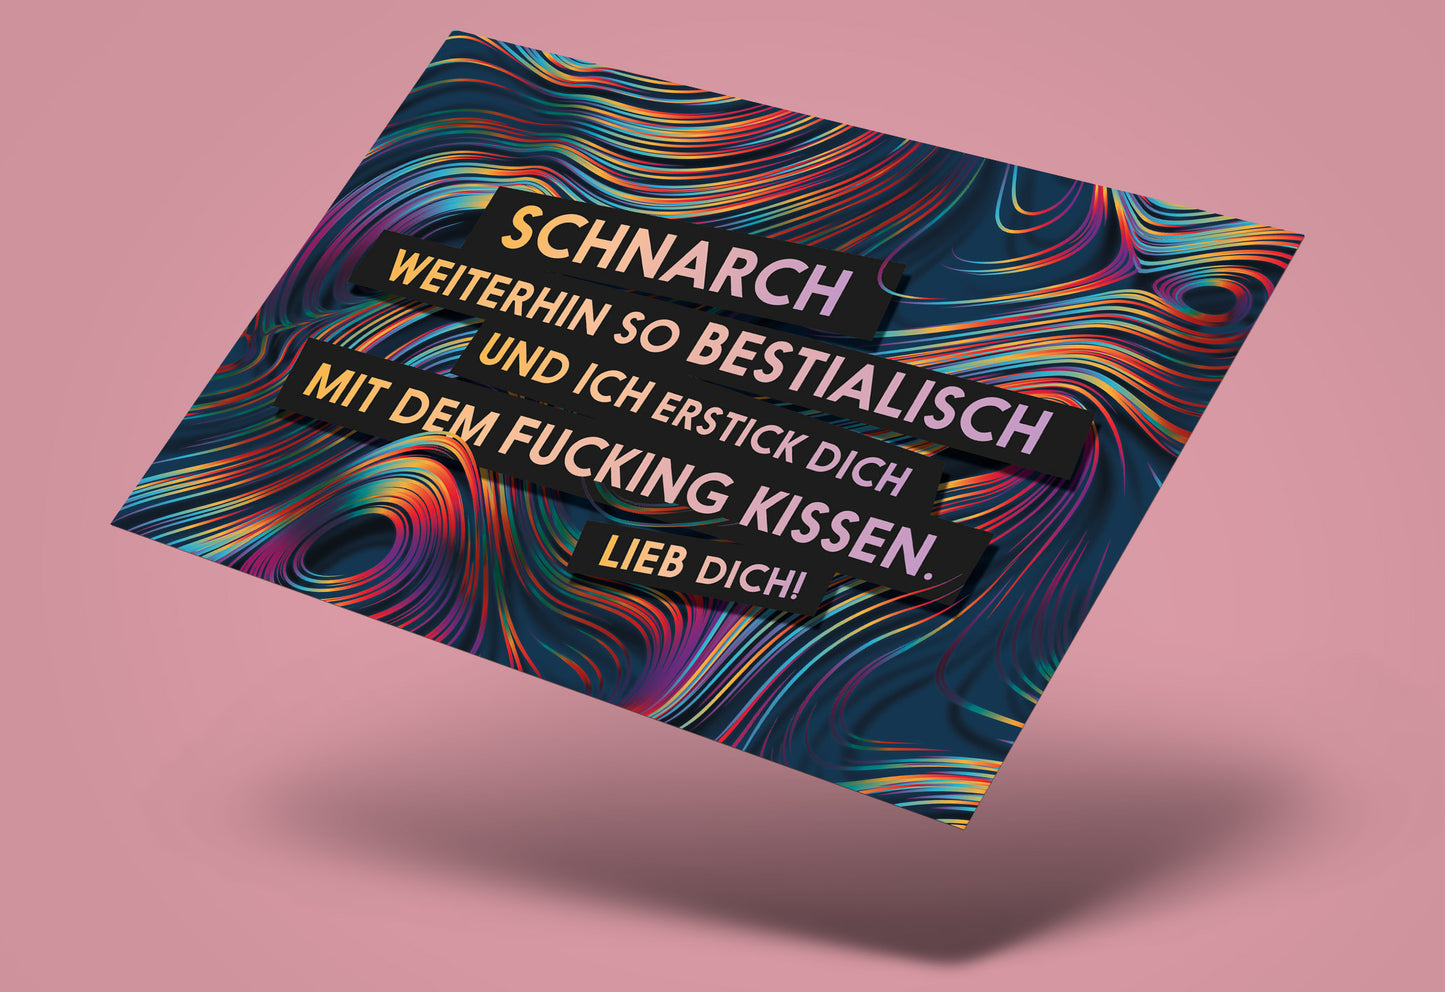 Schnarchen Fck You Card